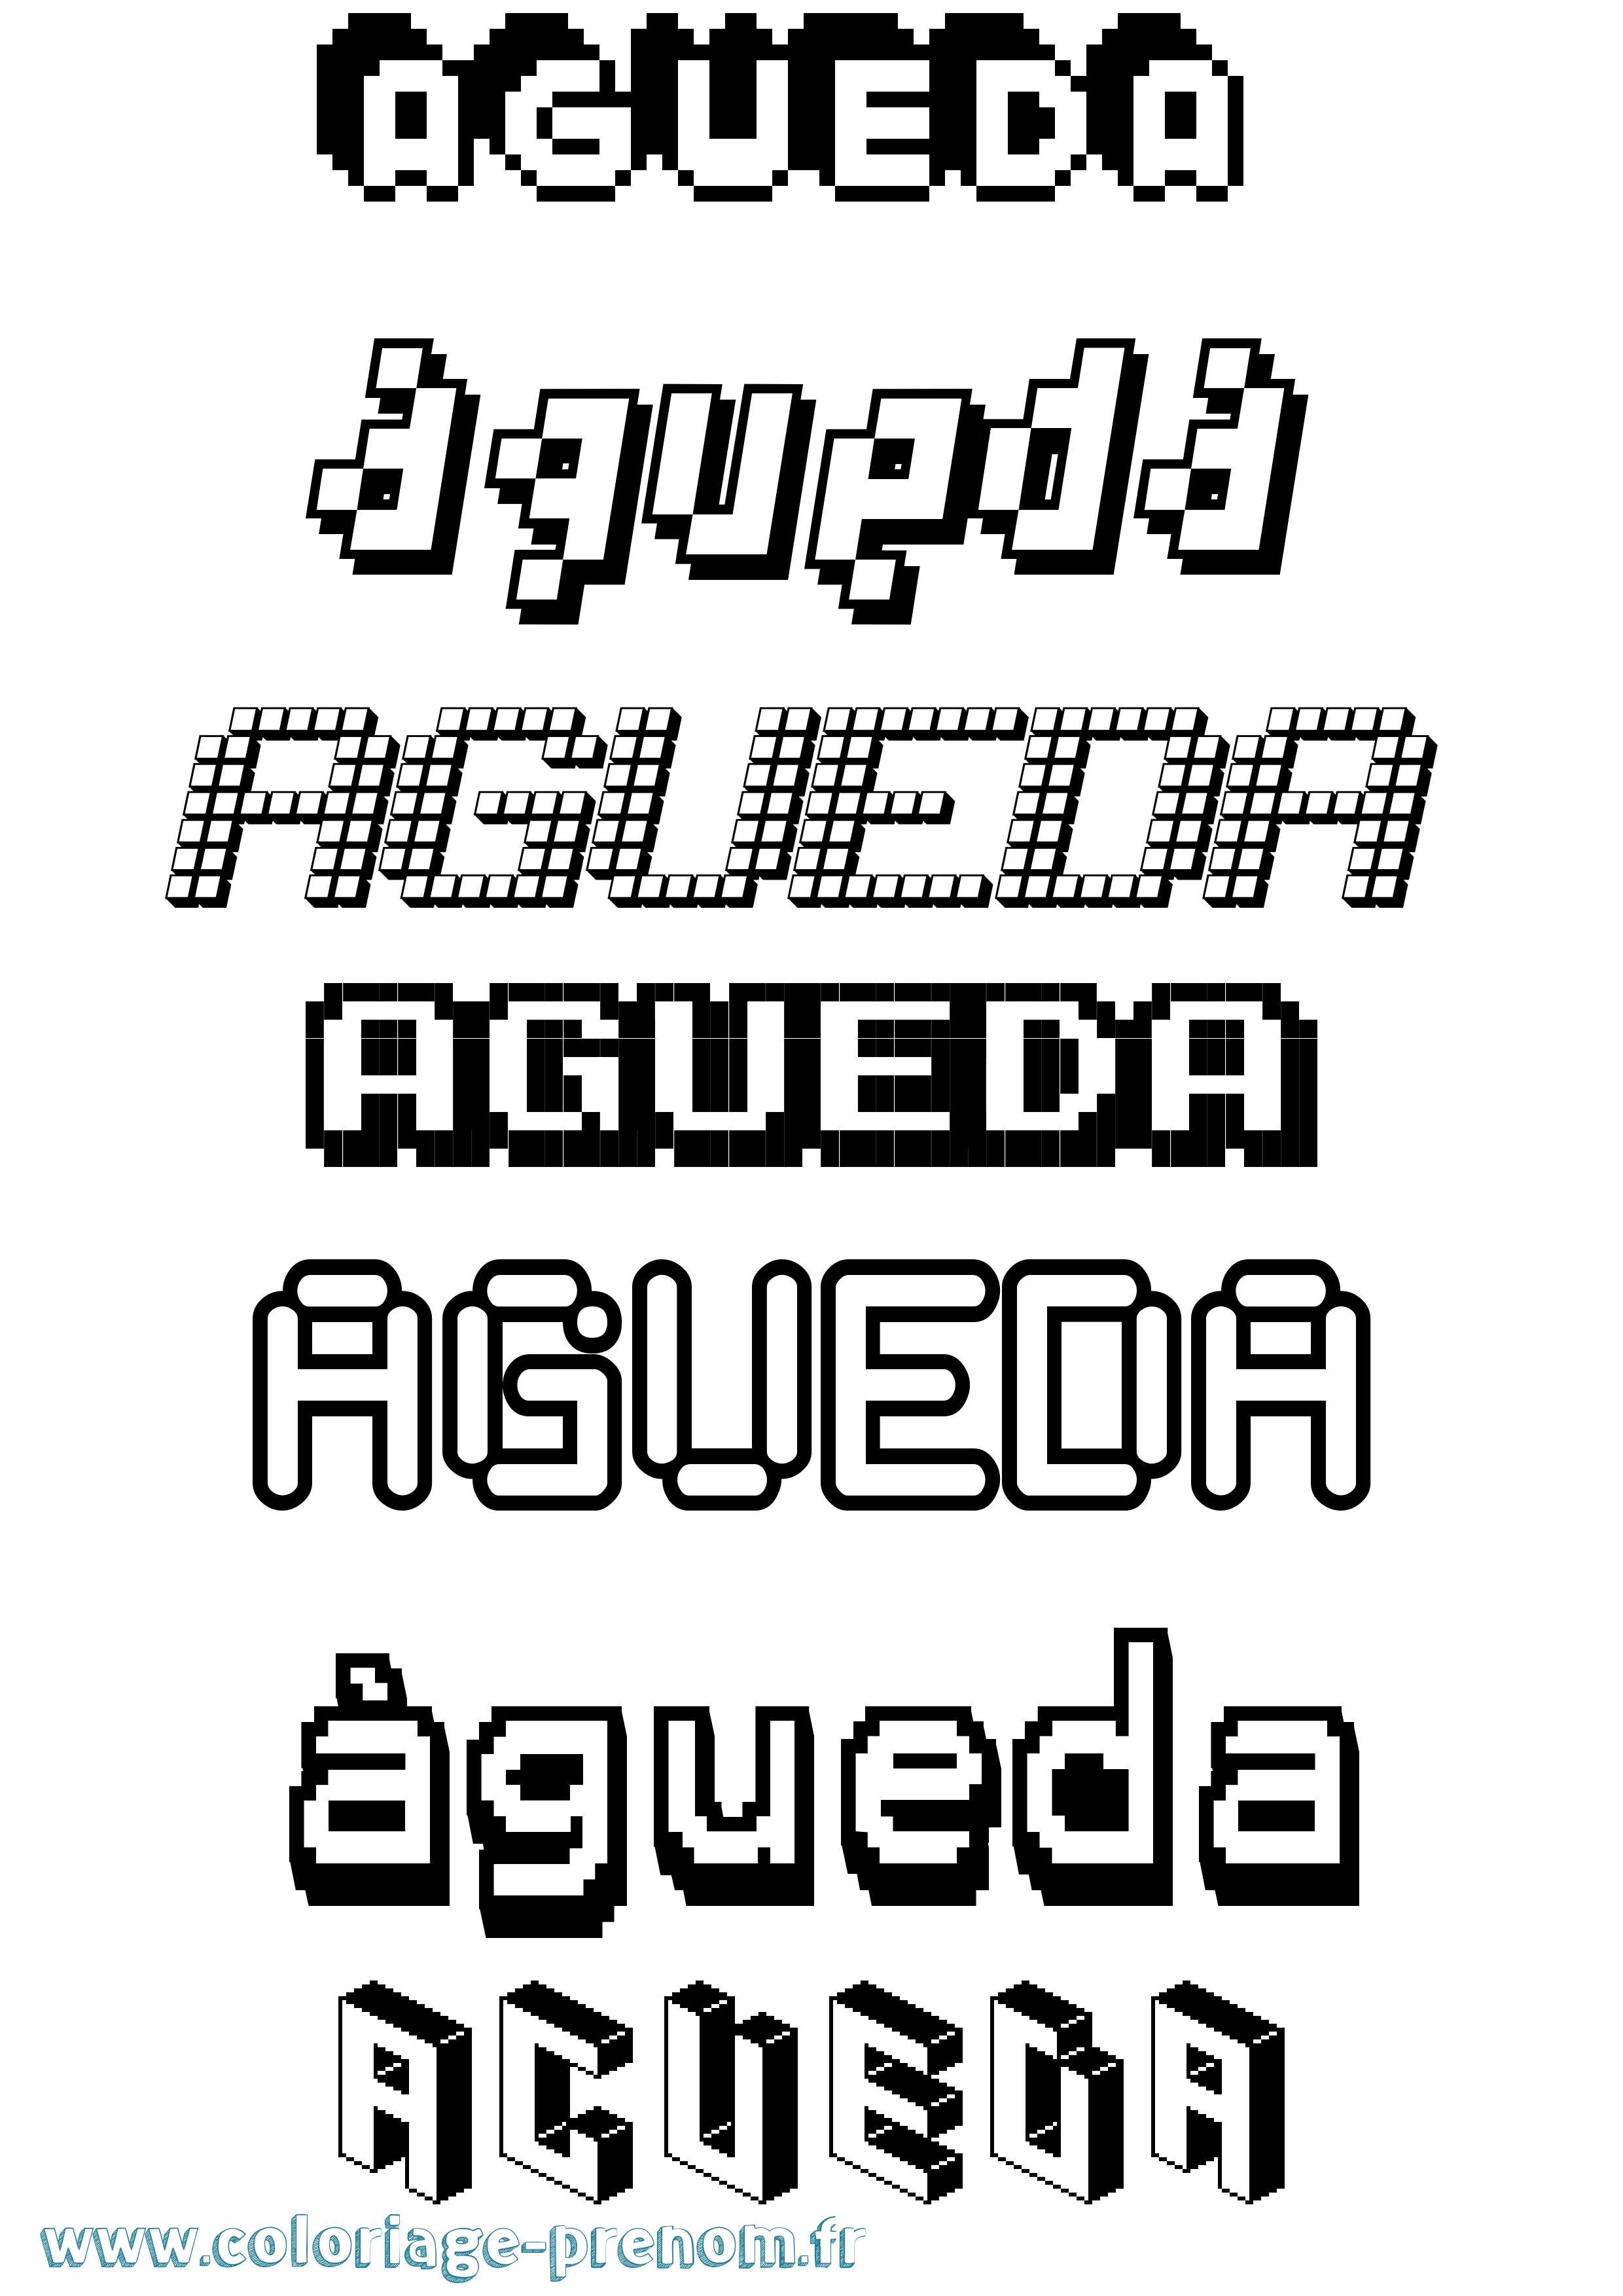 Coloriage prénom Águeda Pixel